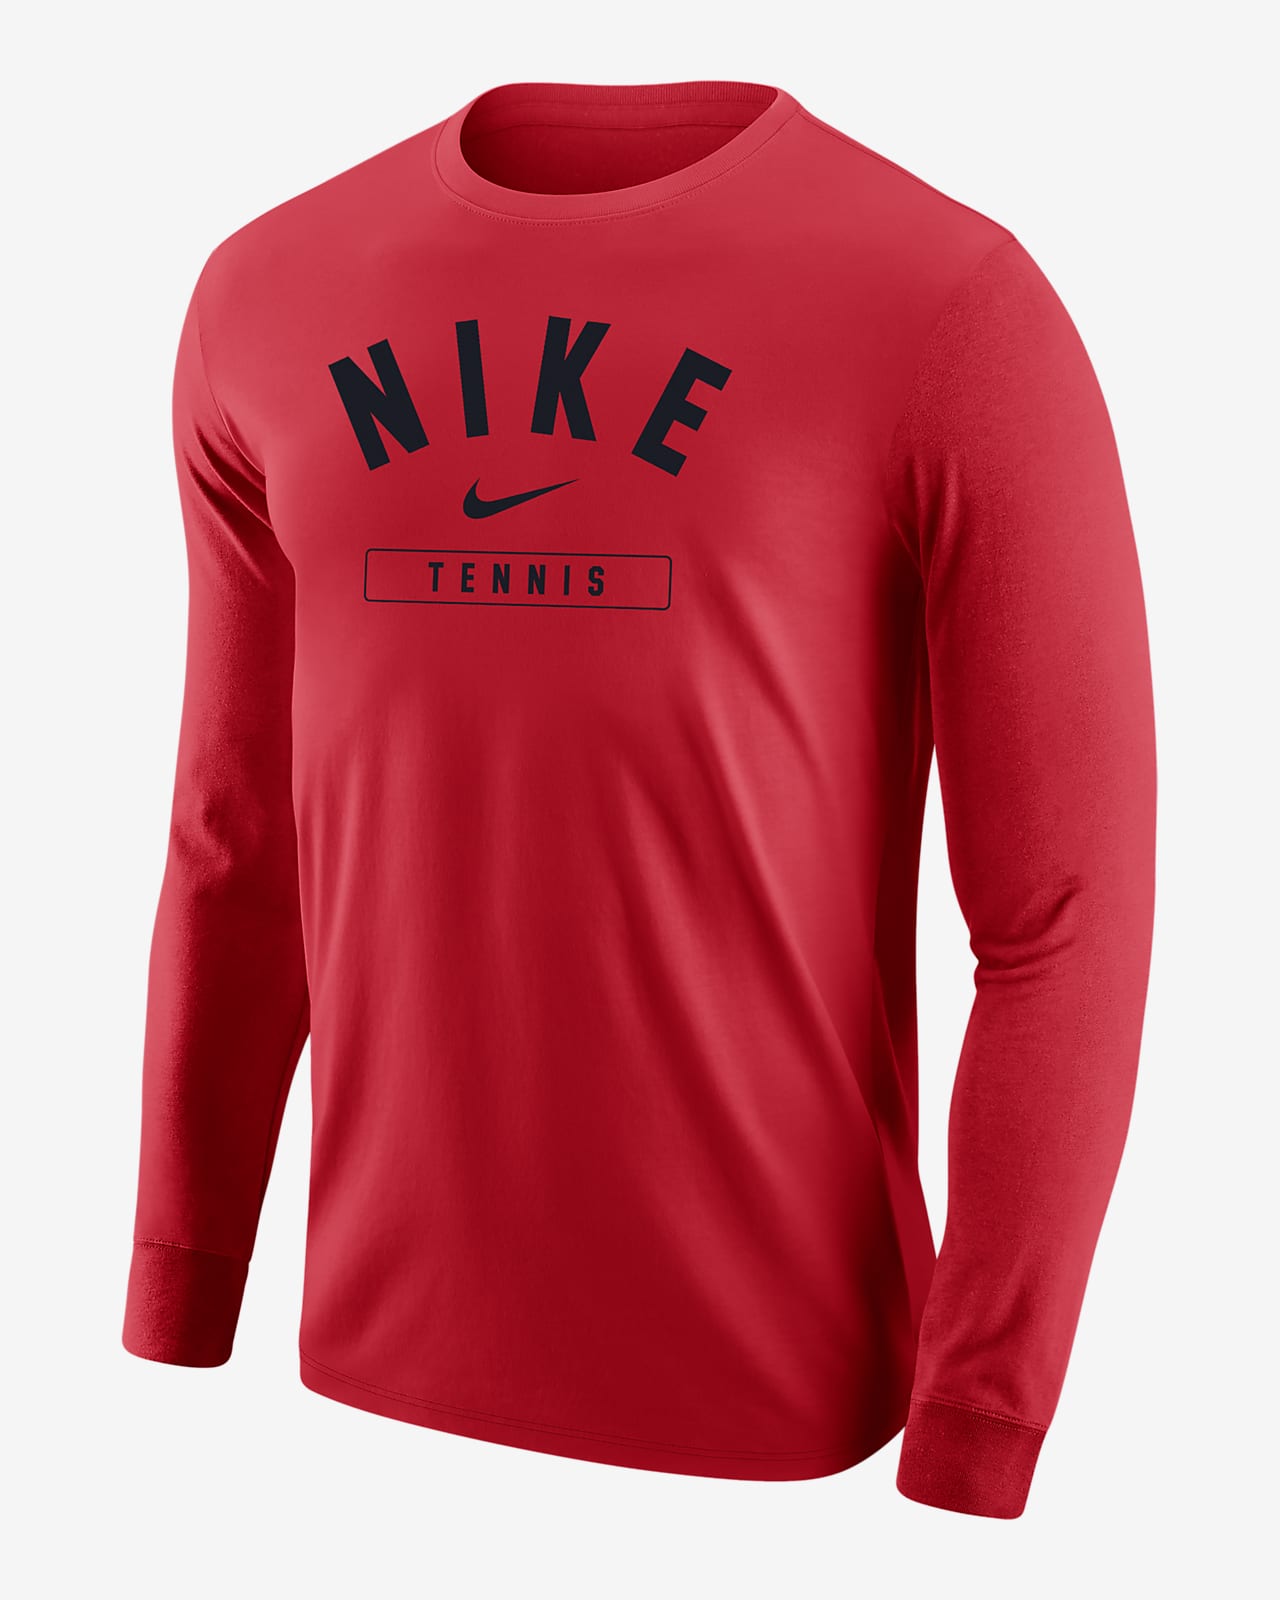 Nike Tennis Men's Long-Sleeve T-Shirt